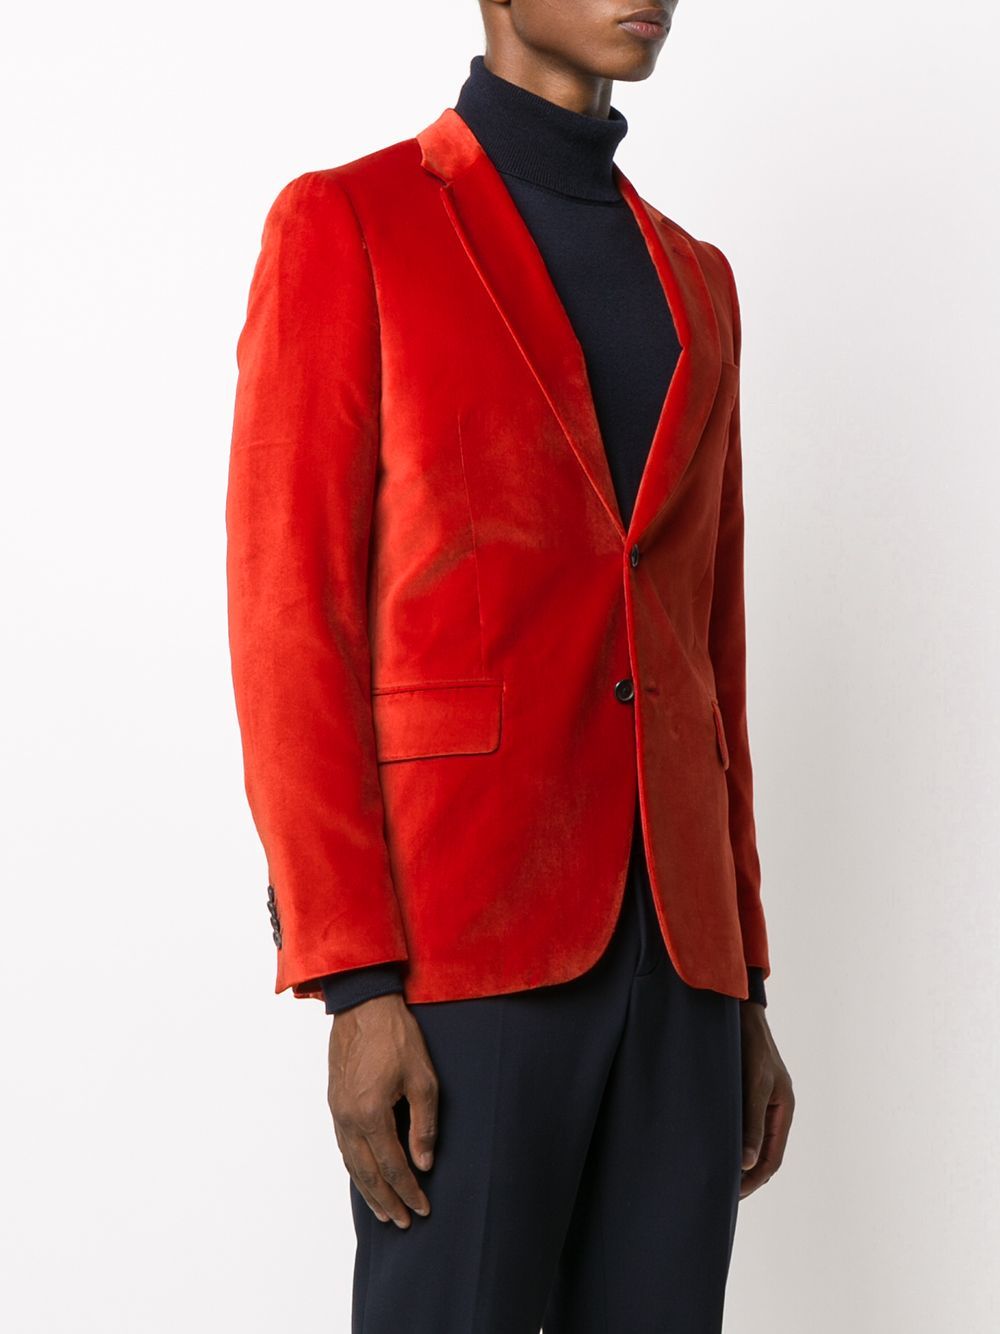 Paul Smith Tailored Velvet Blazer, $1,286 | farfetch.com | Lookastic